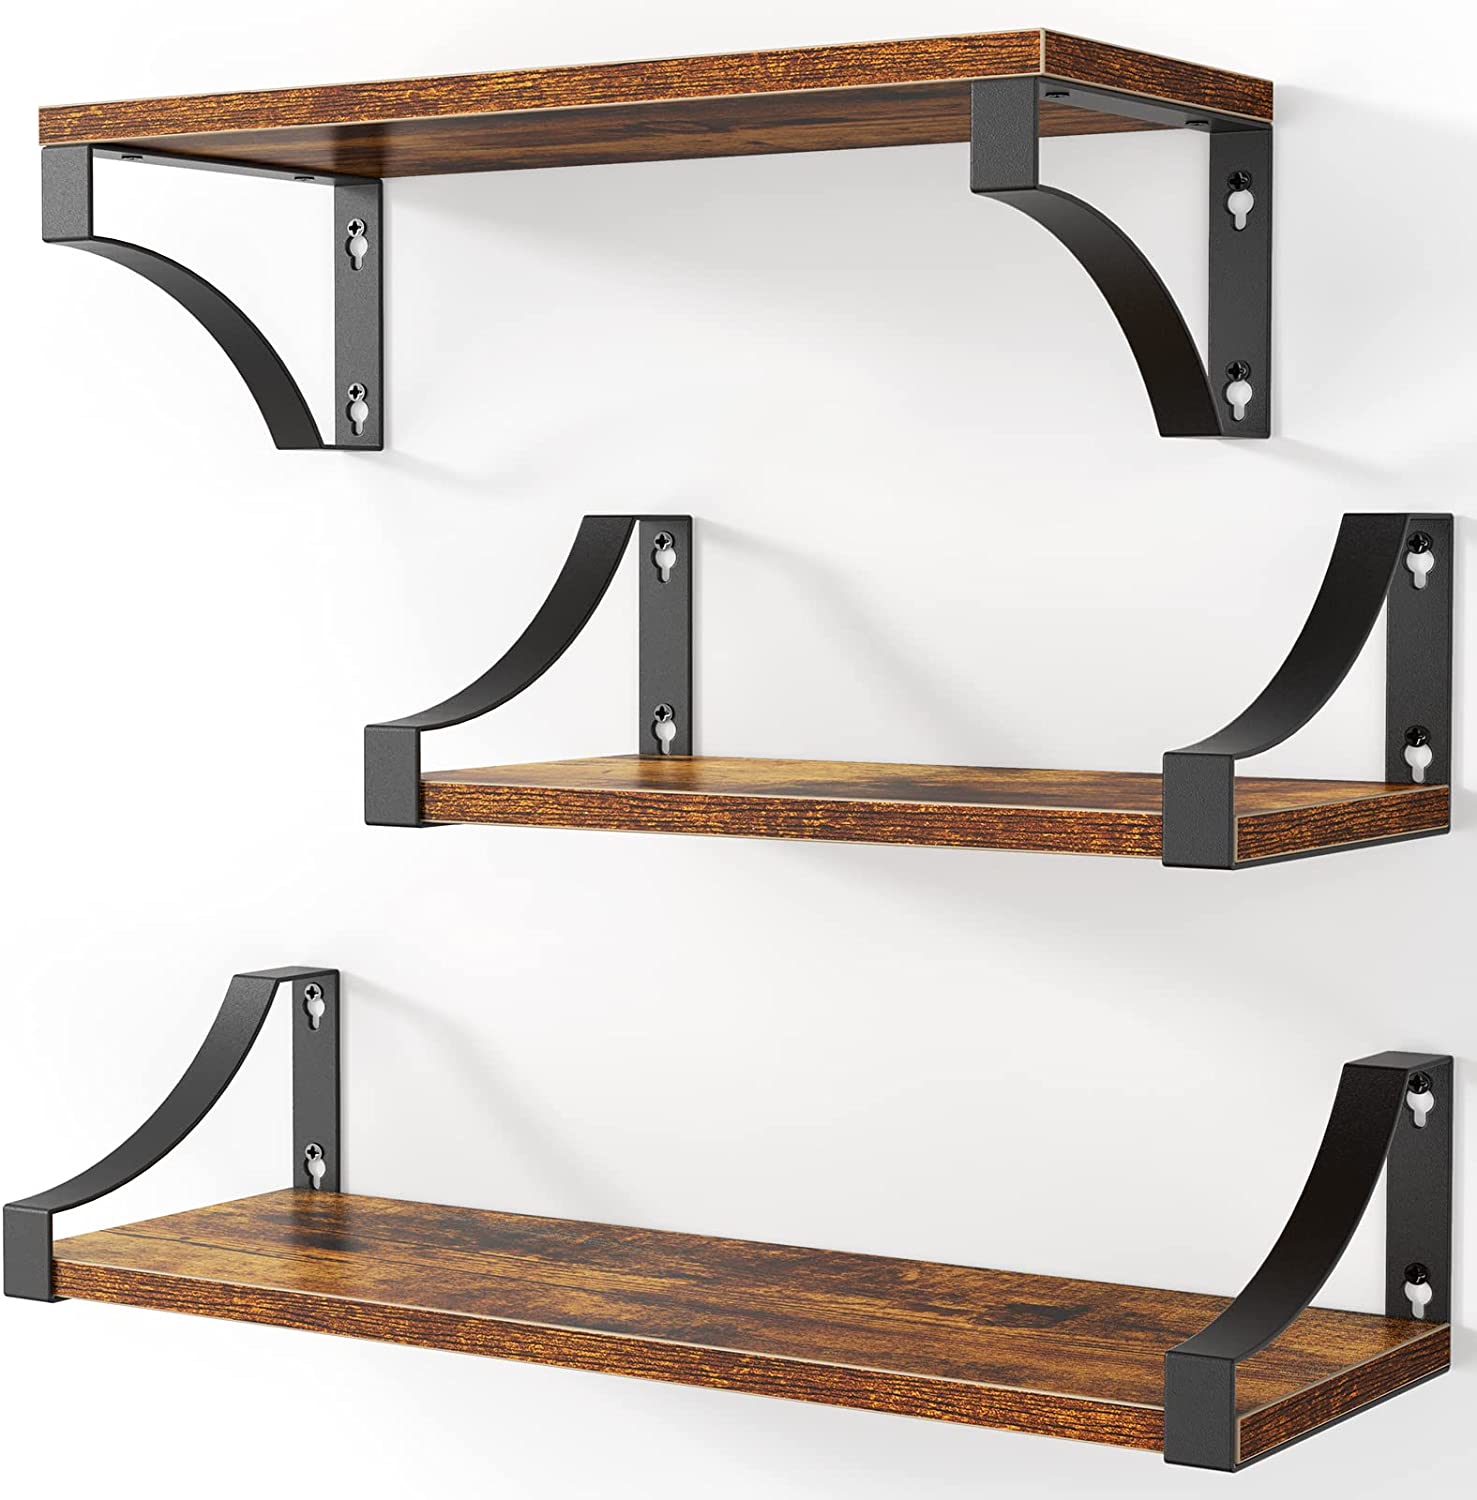 DS BS Rustic Wood Floating Shelves Wall Mounted Set of 3-Dark Brown